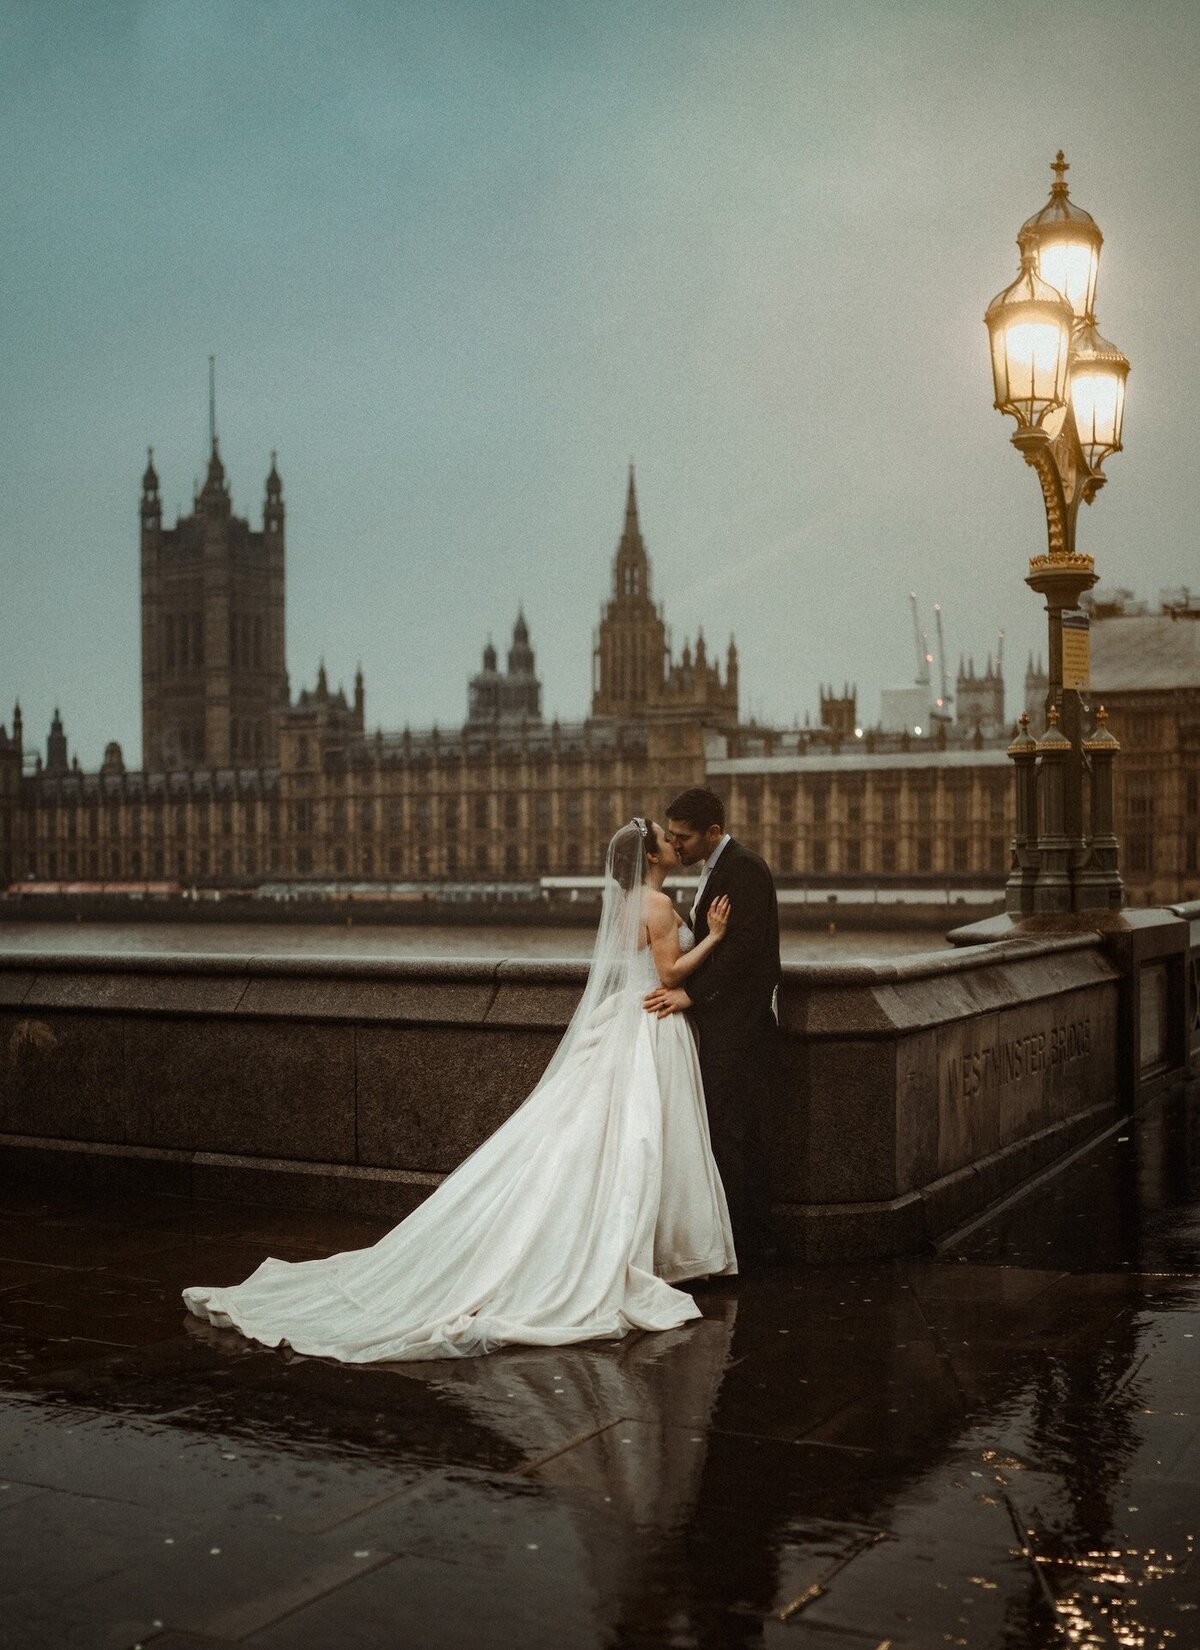 Fire & Ice Wedding Photography Homepage Header Image 6